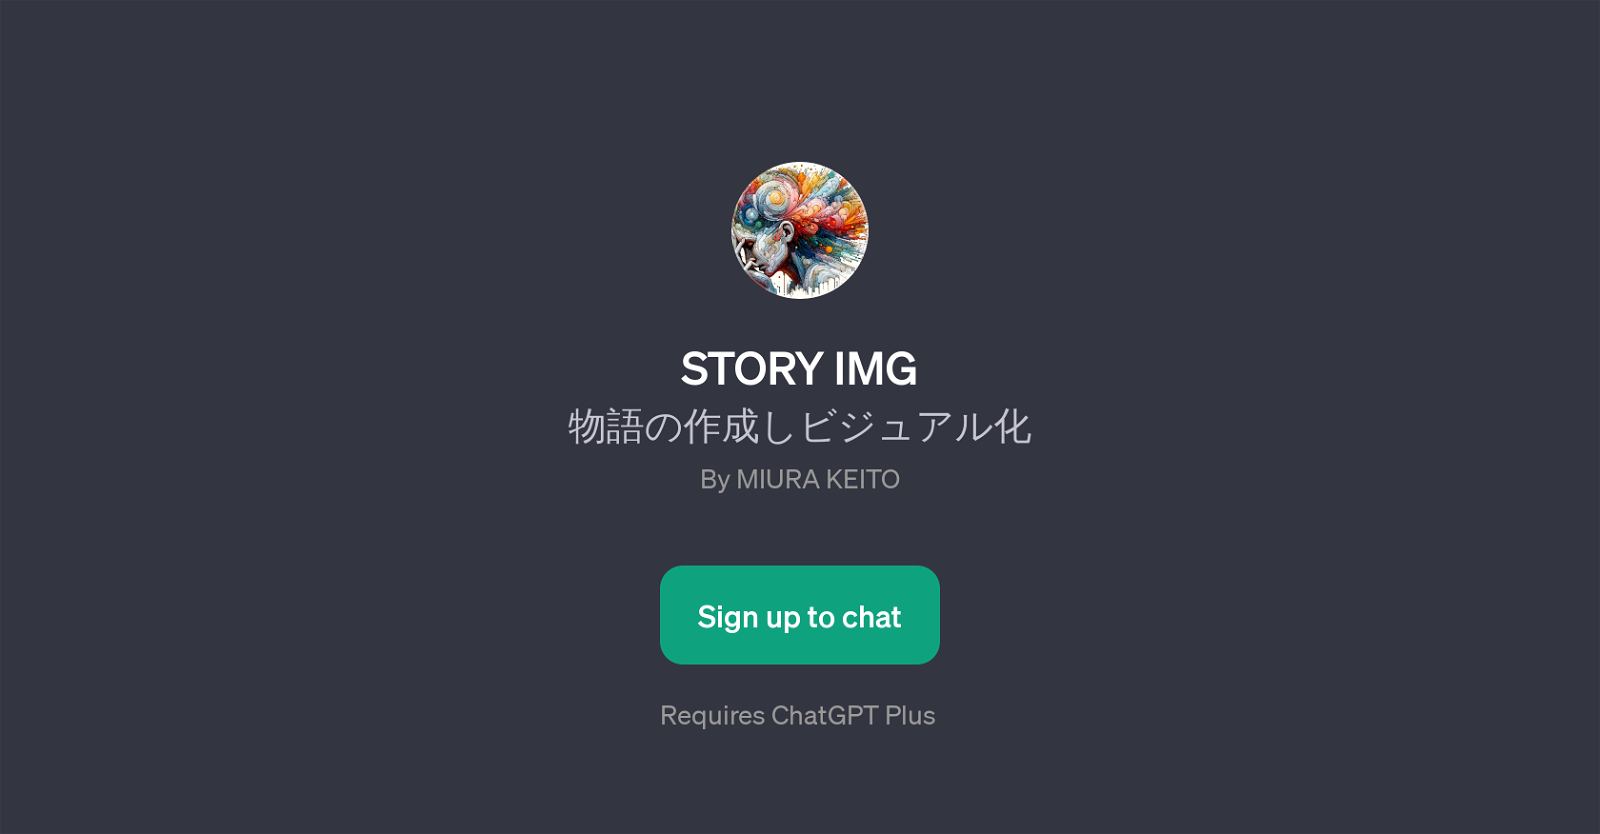 STORY IMG website